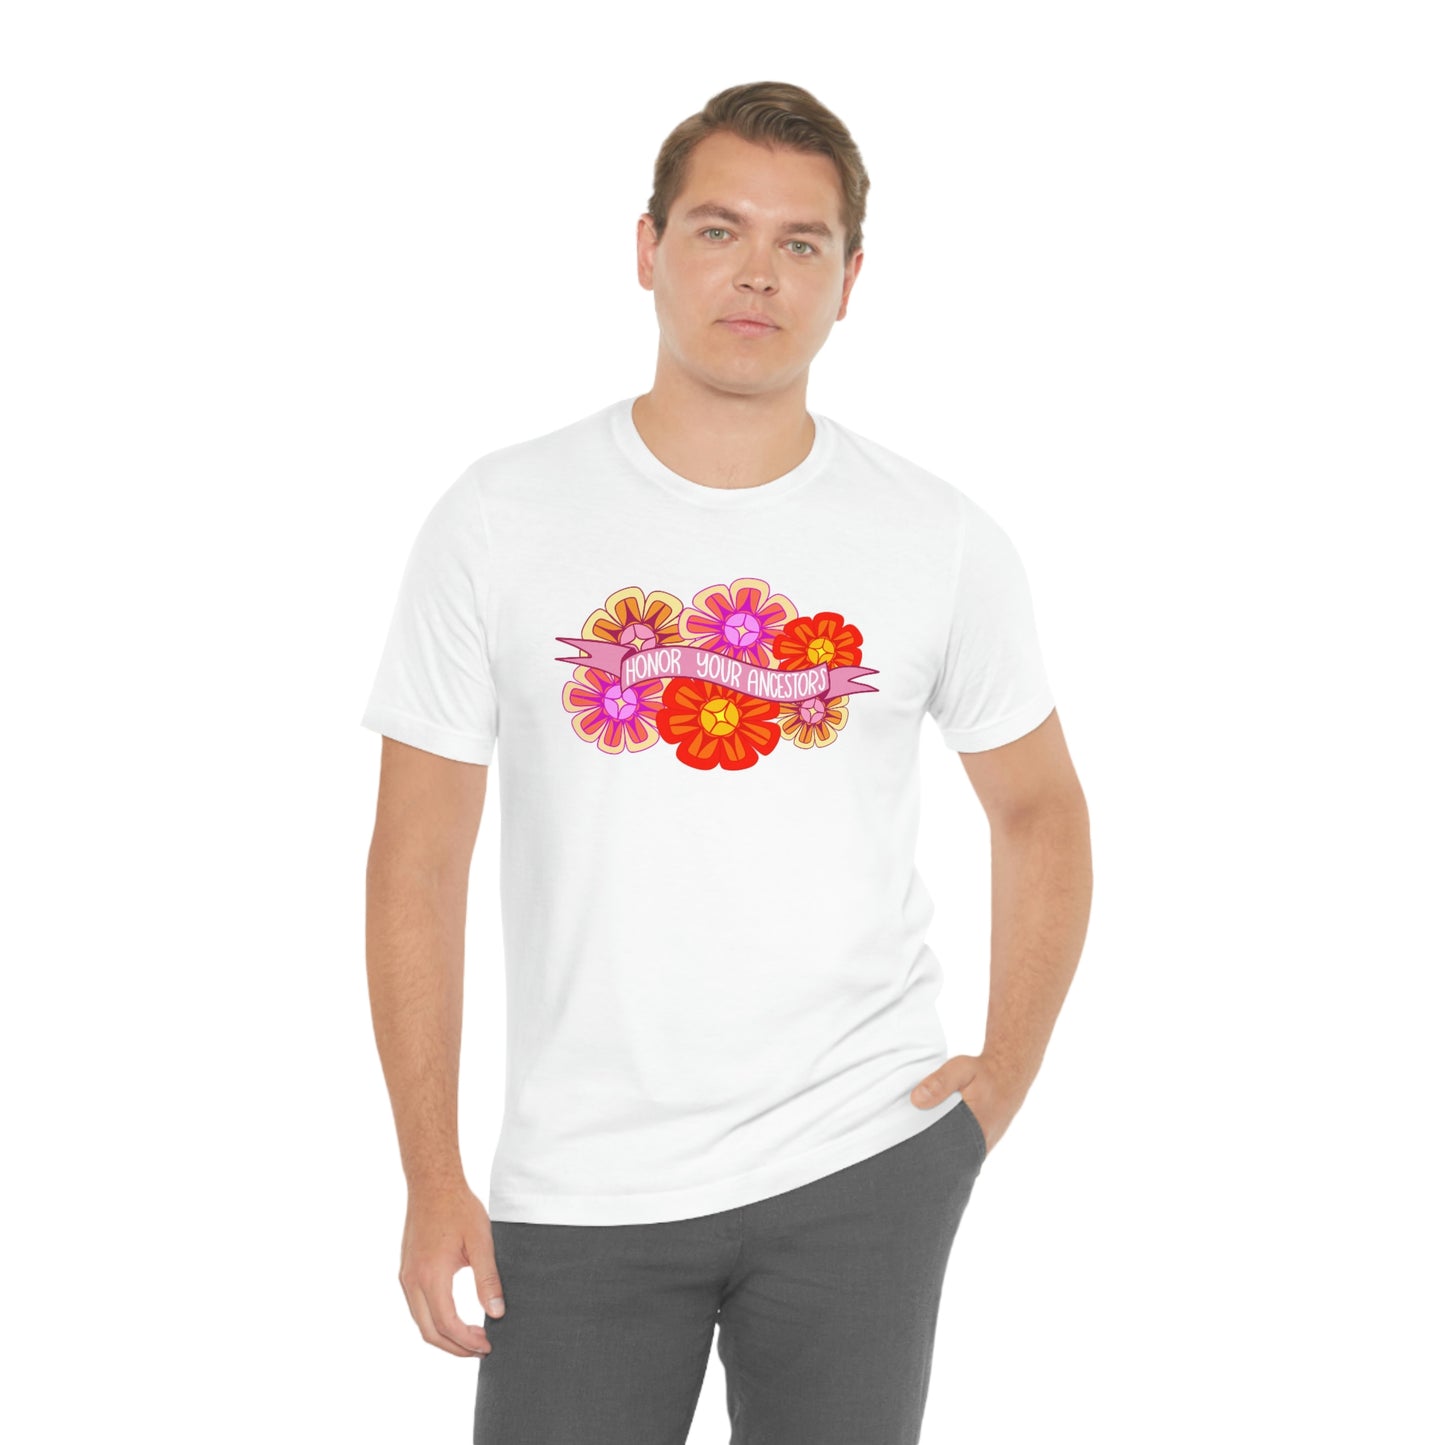 Honor Your Ancestors Floral Shirt Indigenous Shirt Native American Art